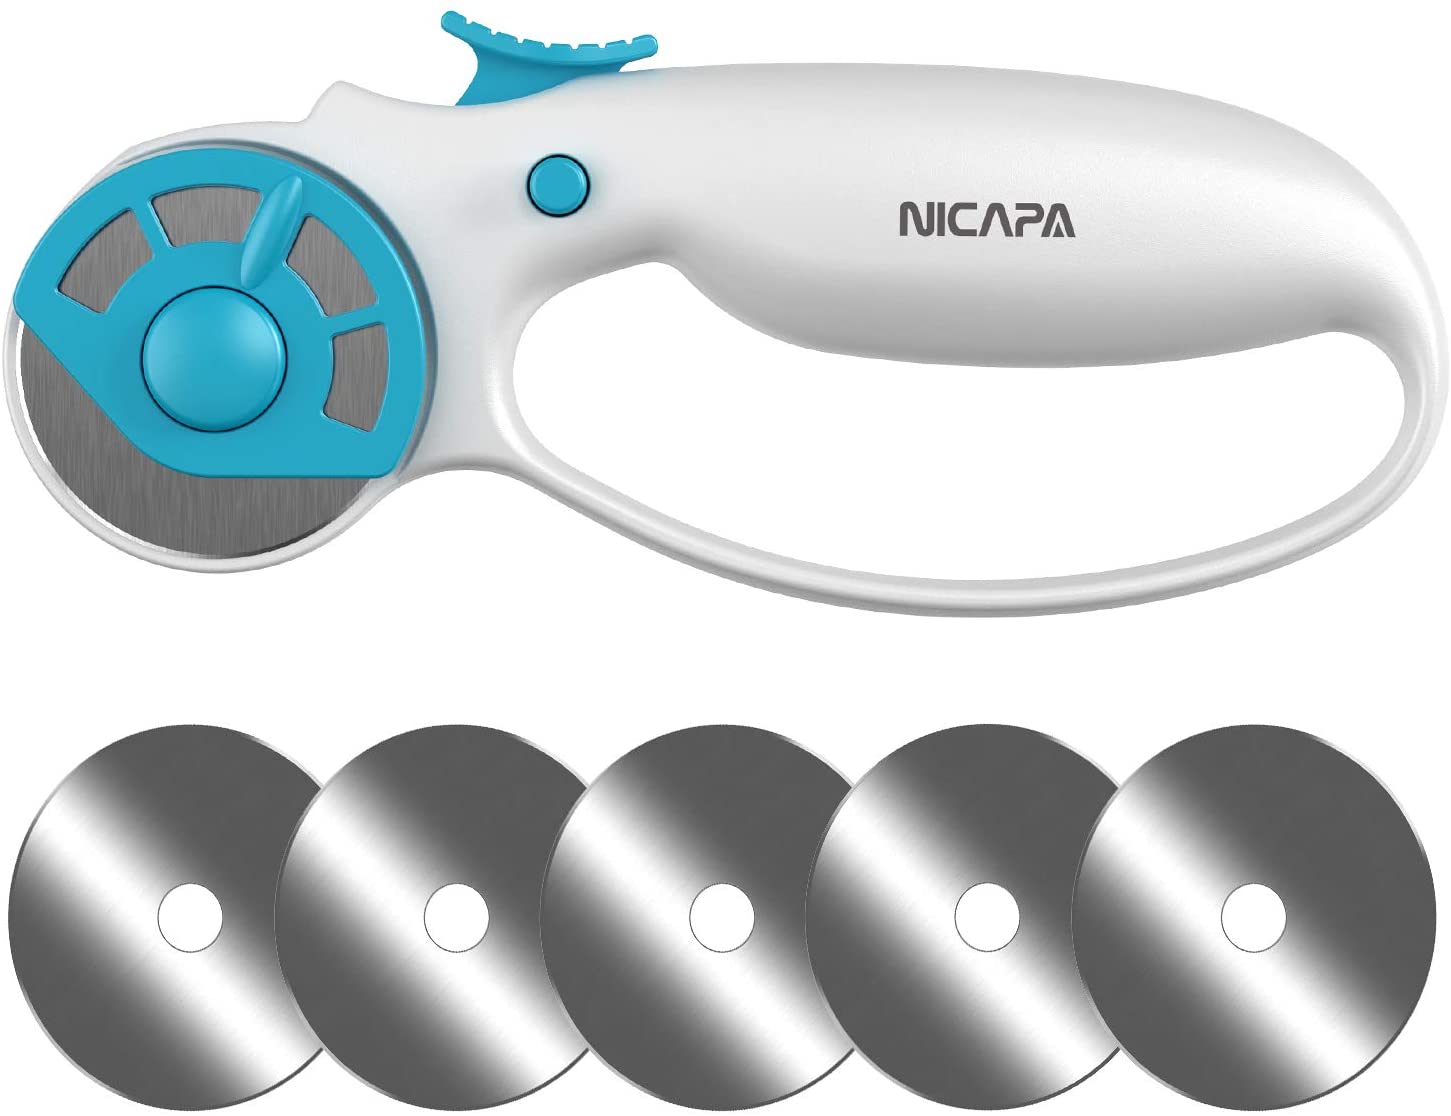 NICAPA 45mm Ergonomic Sewing Rotary Cutter